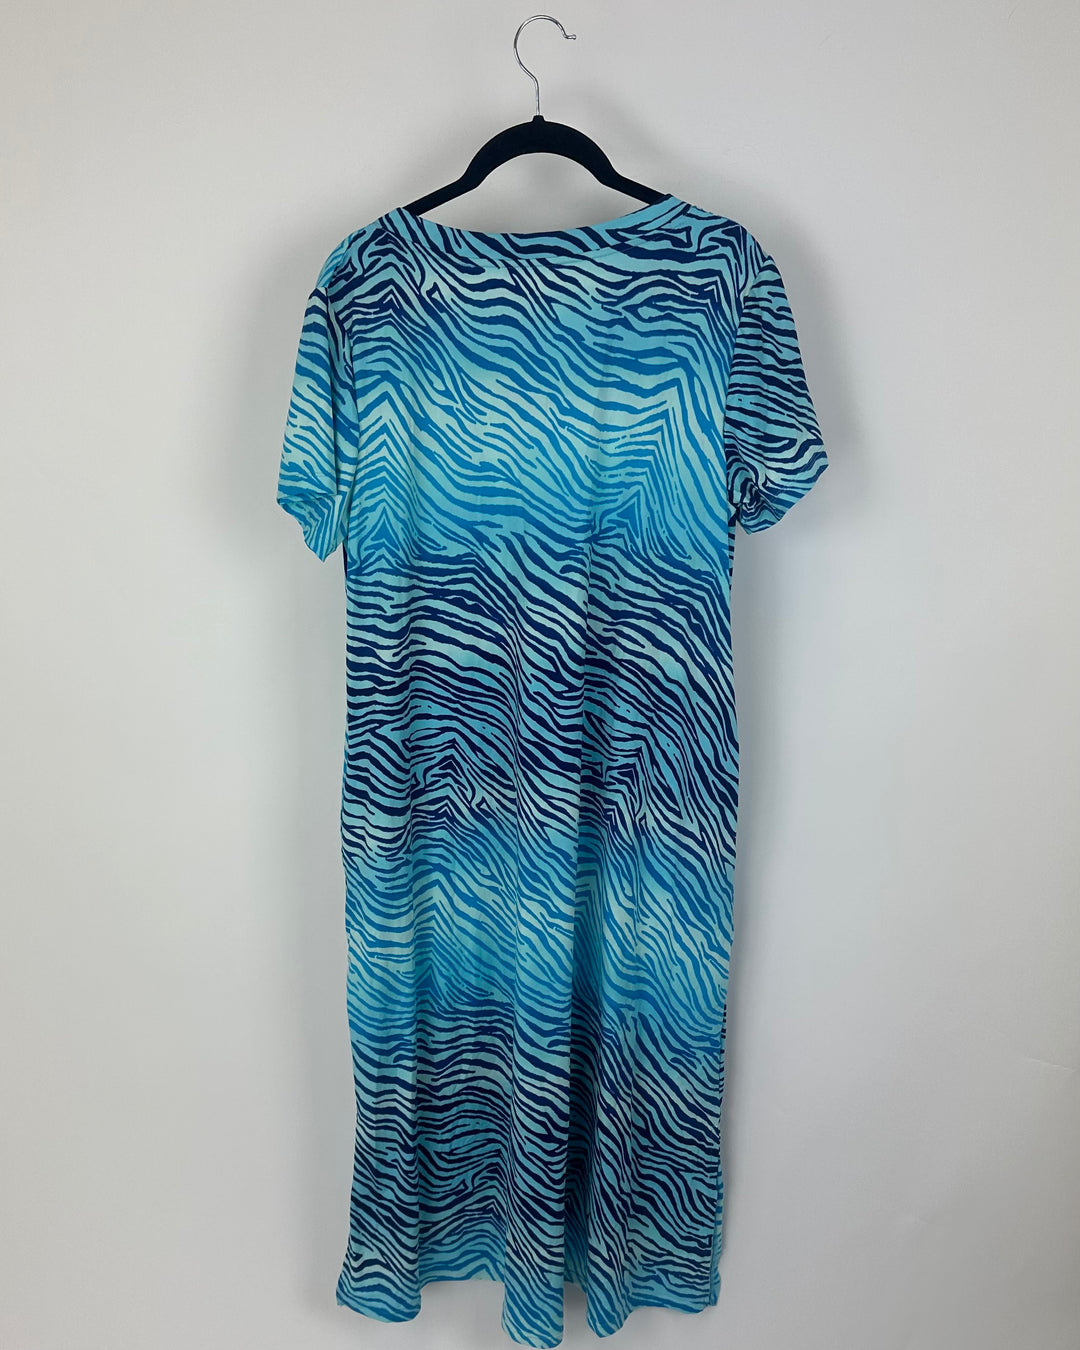 Blue Flowy Short Sleeve Dress - Size 8/10